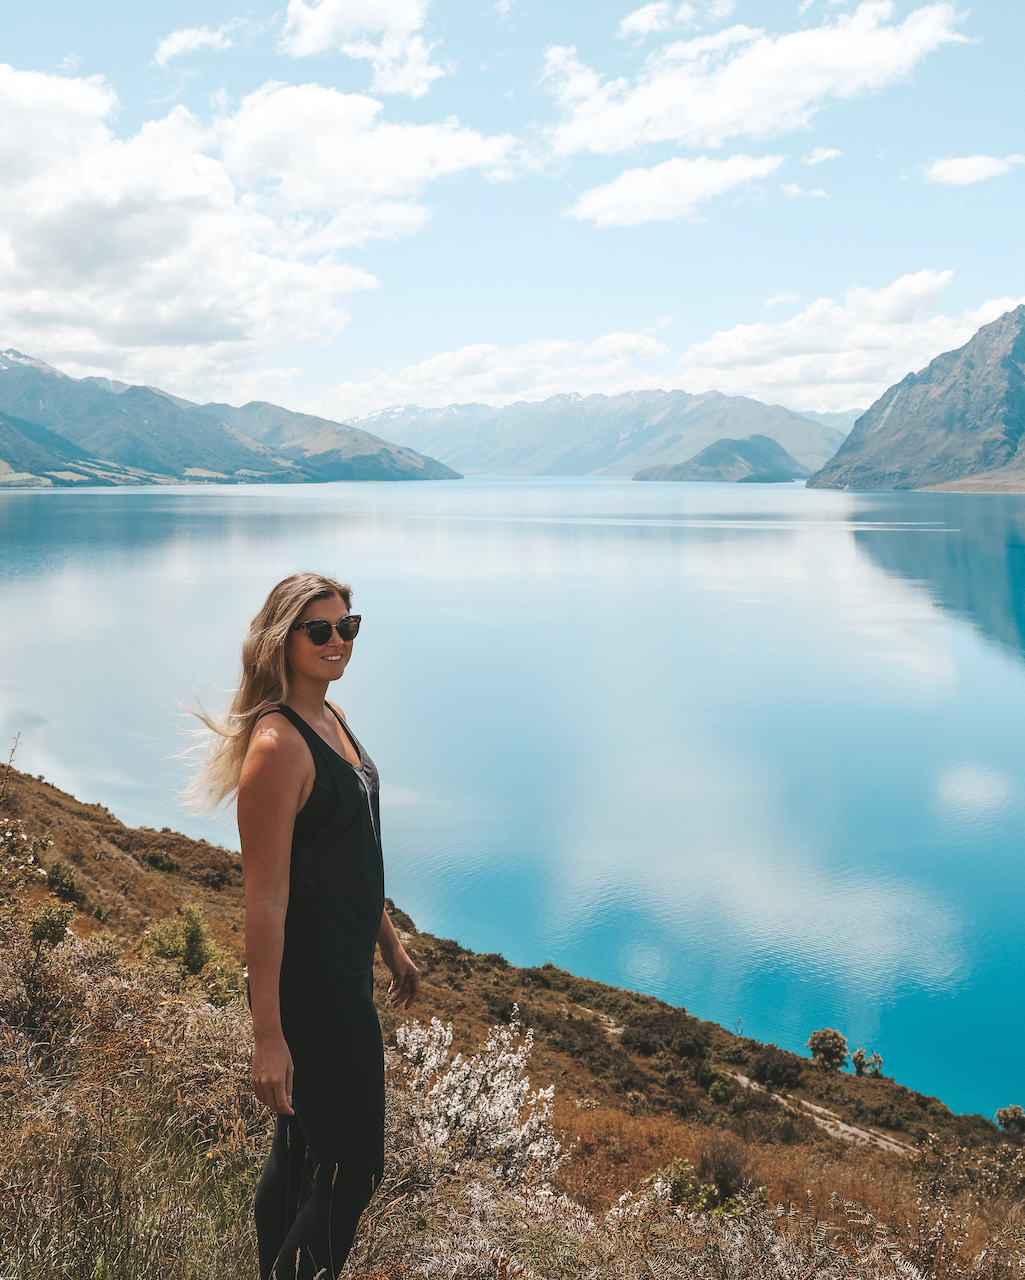 Woman posing in front of grandiose lake with mountain backdrop - Lake Hawea - New Zealand